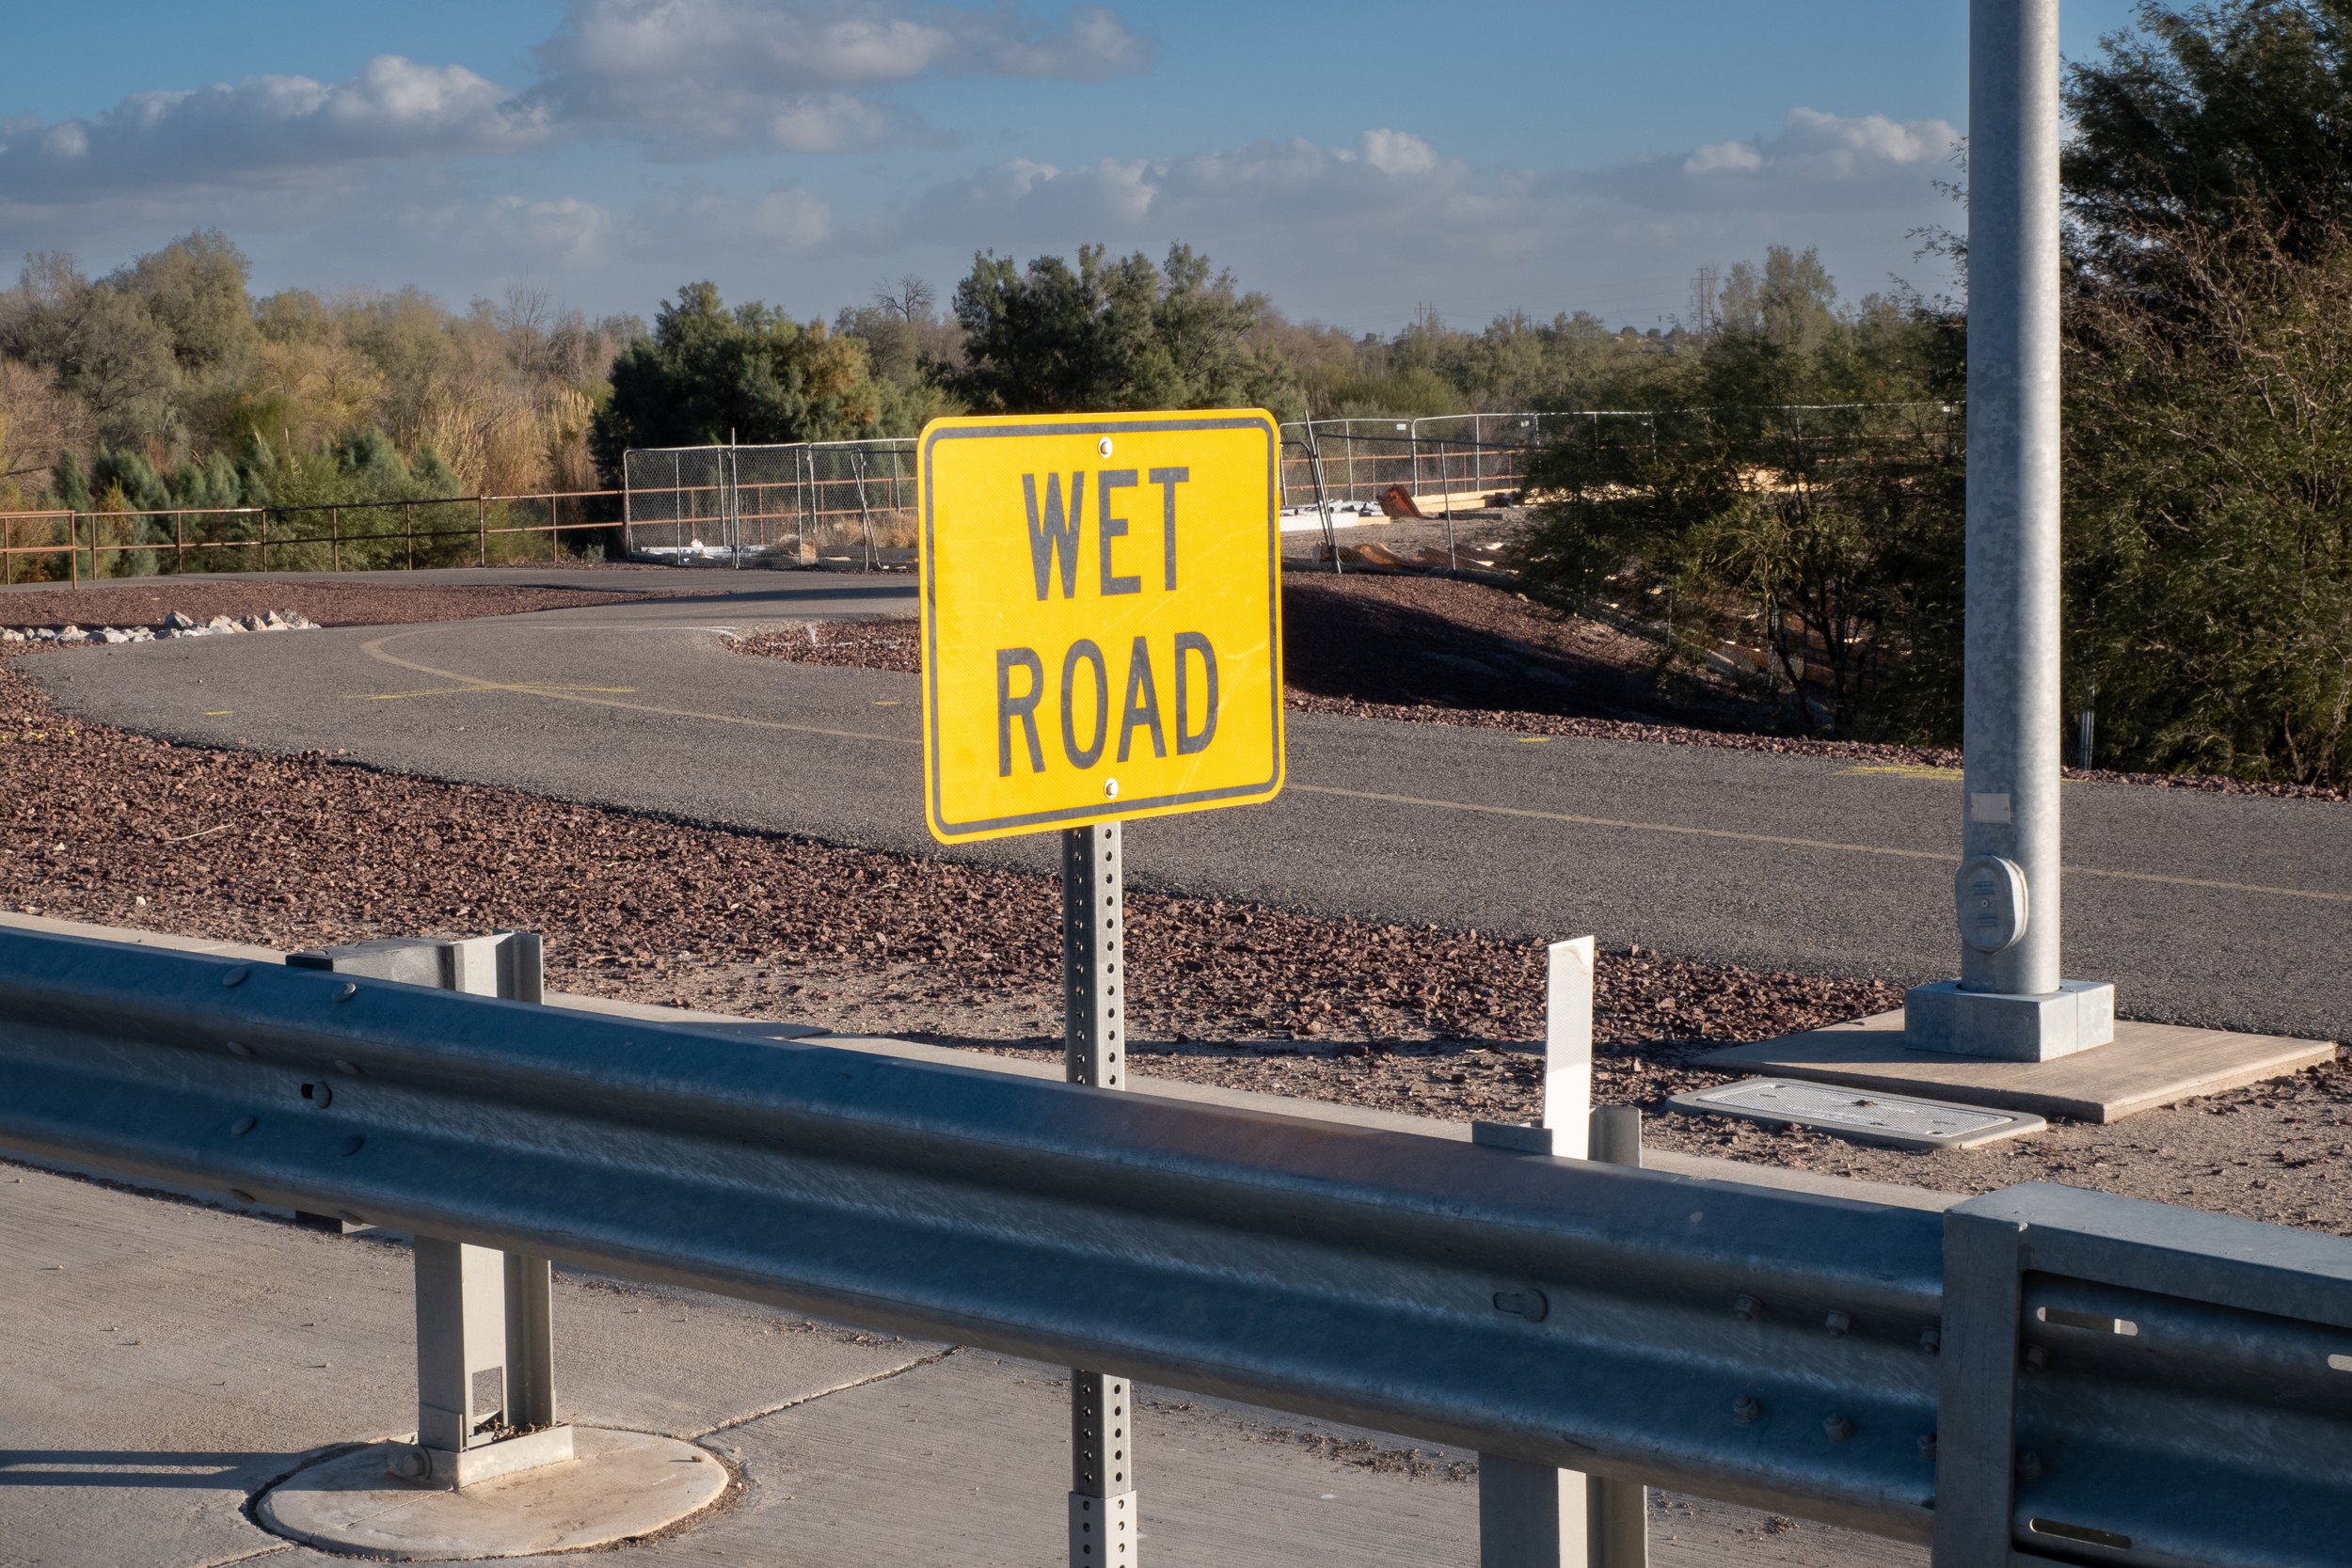 Wet Road ahead sign